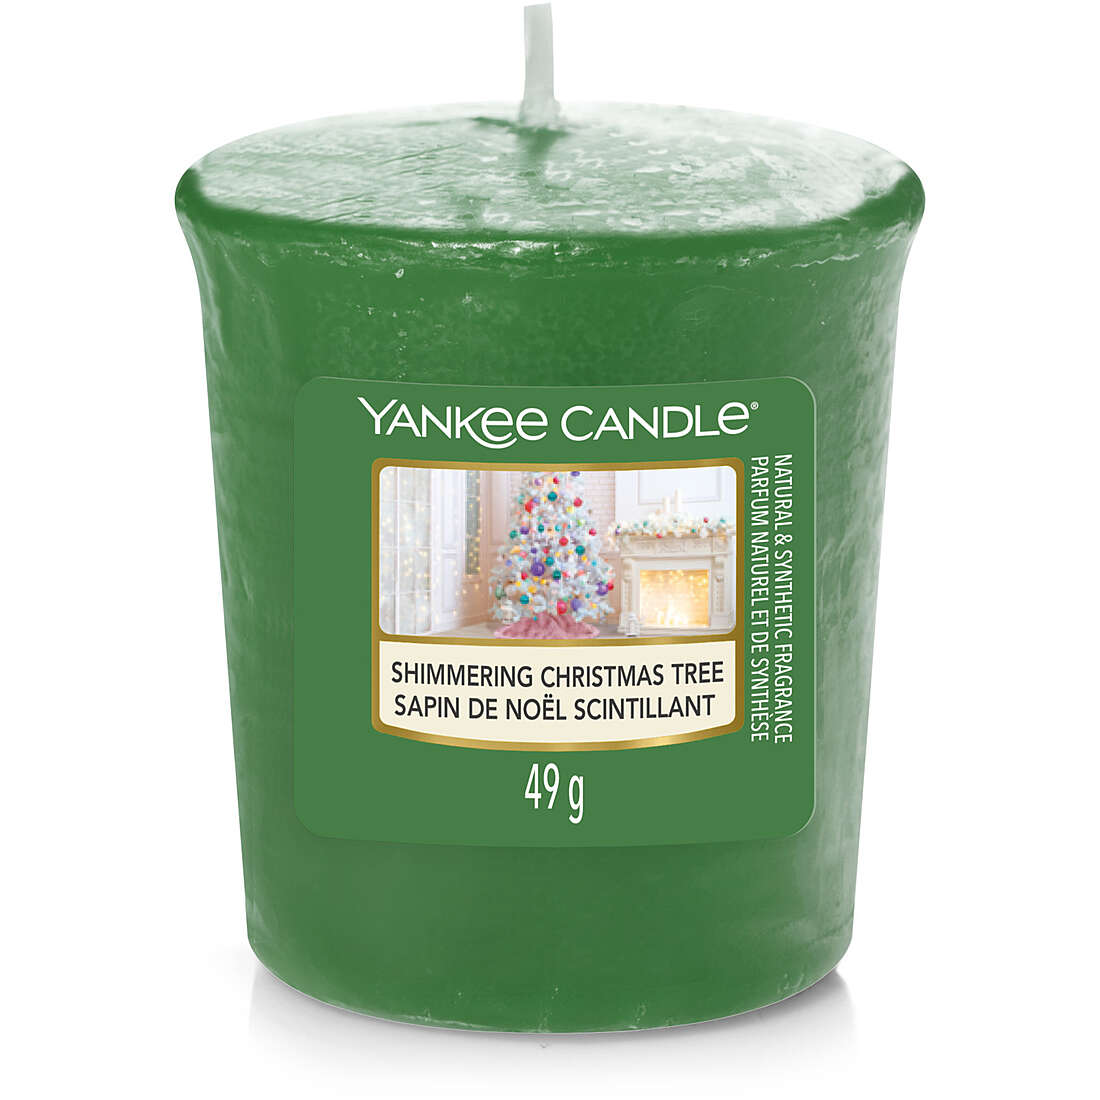 Sampler di Yankee Candle Shimmering Christmas Tree 1743391E